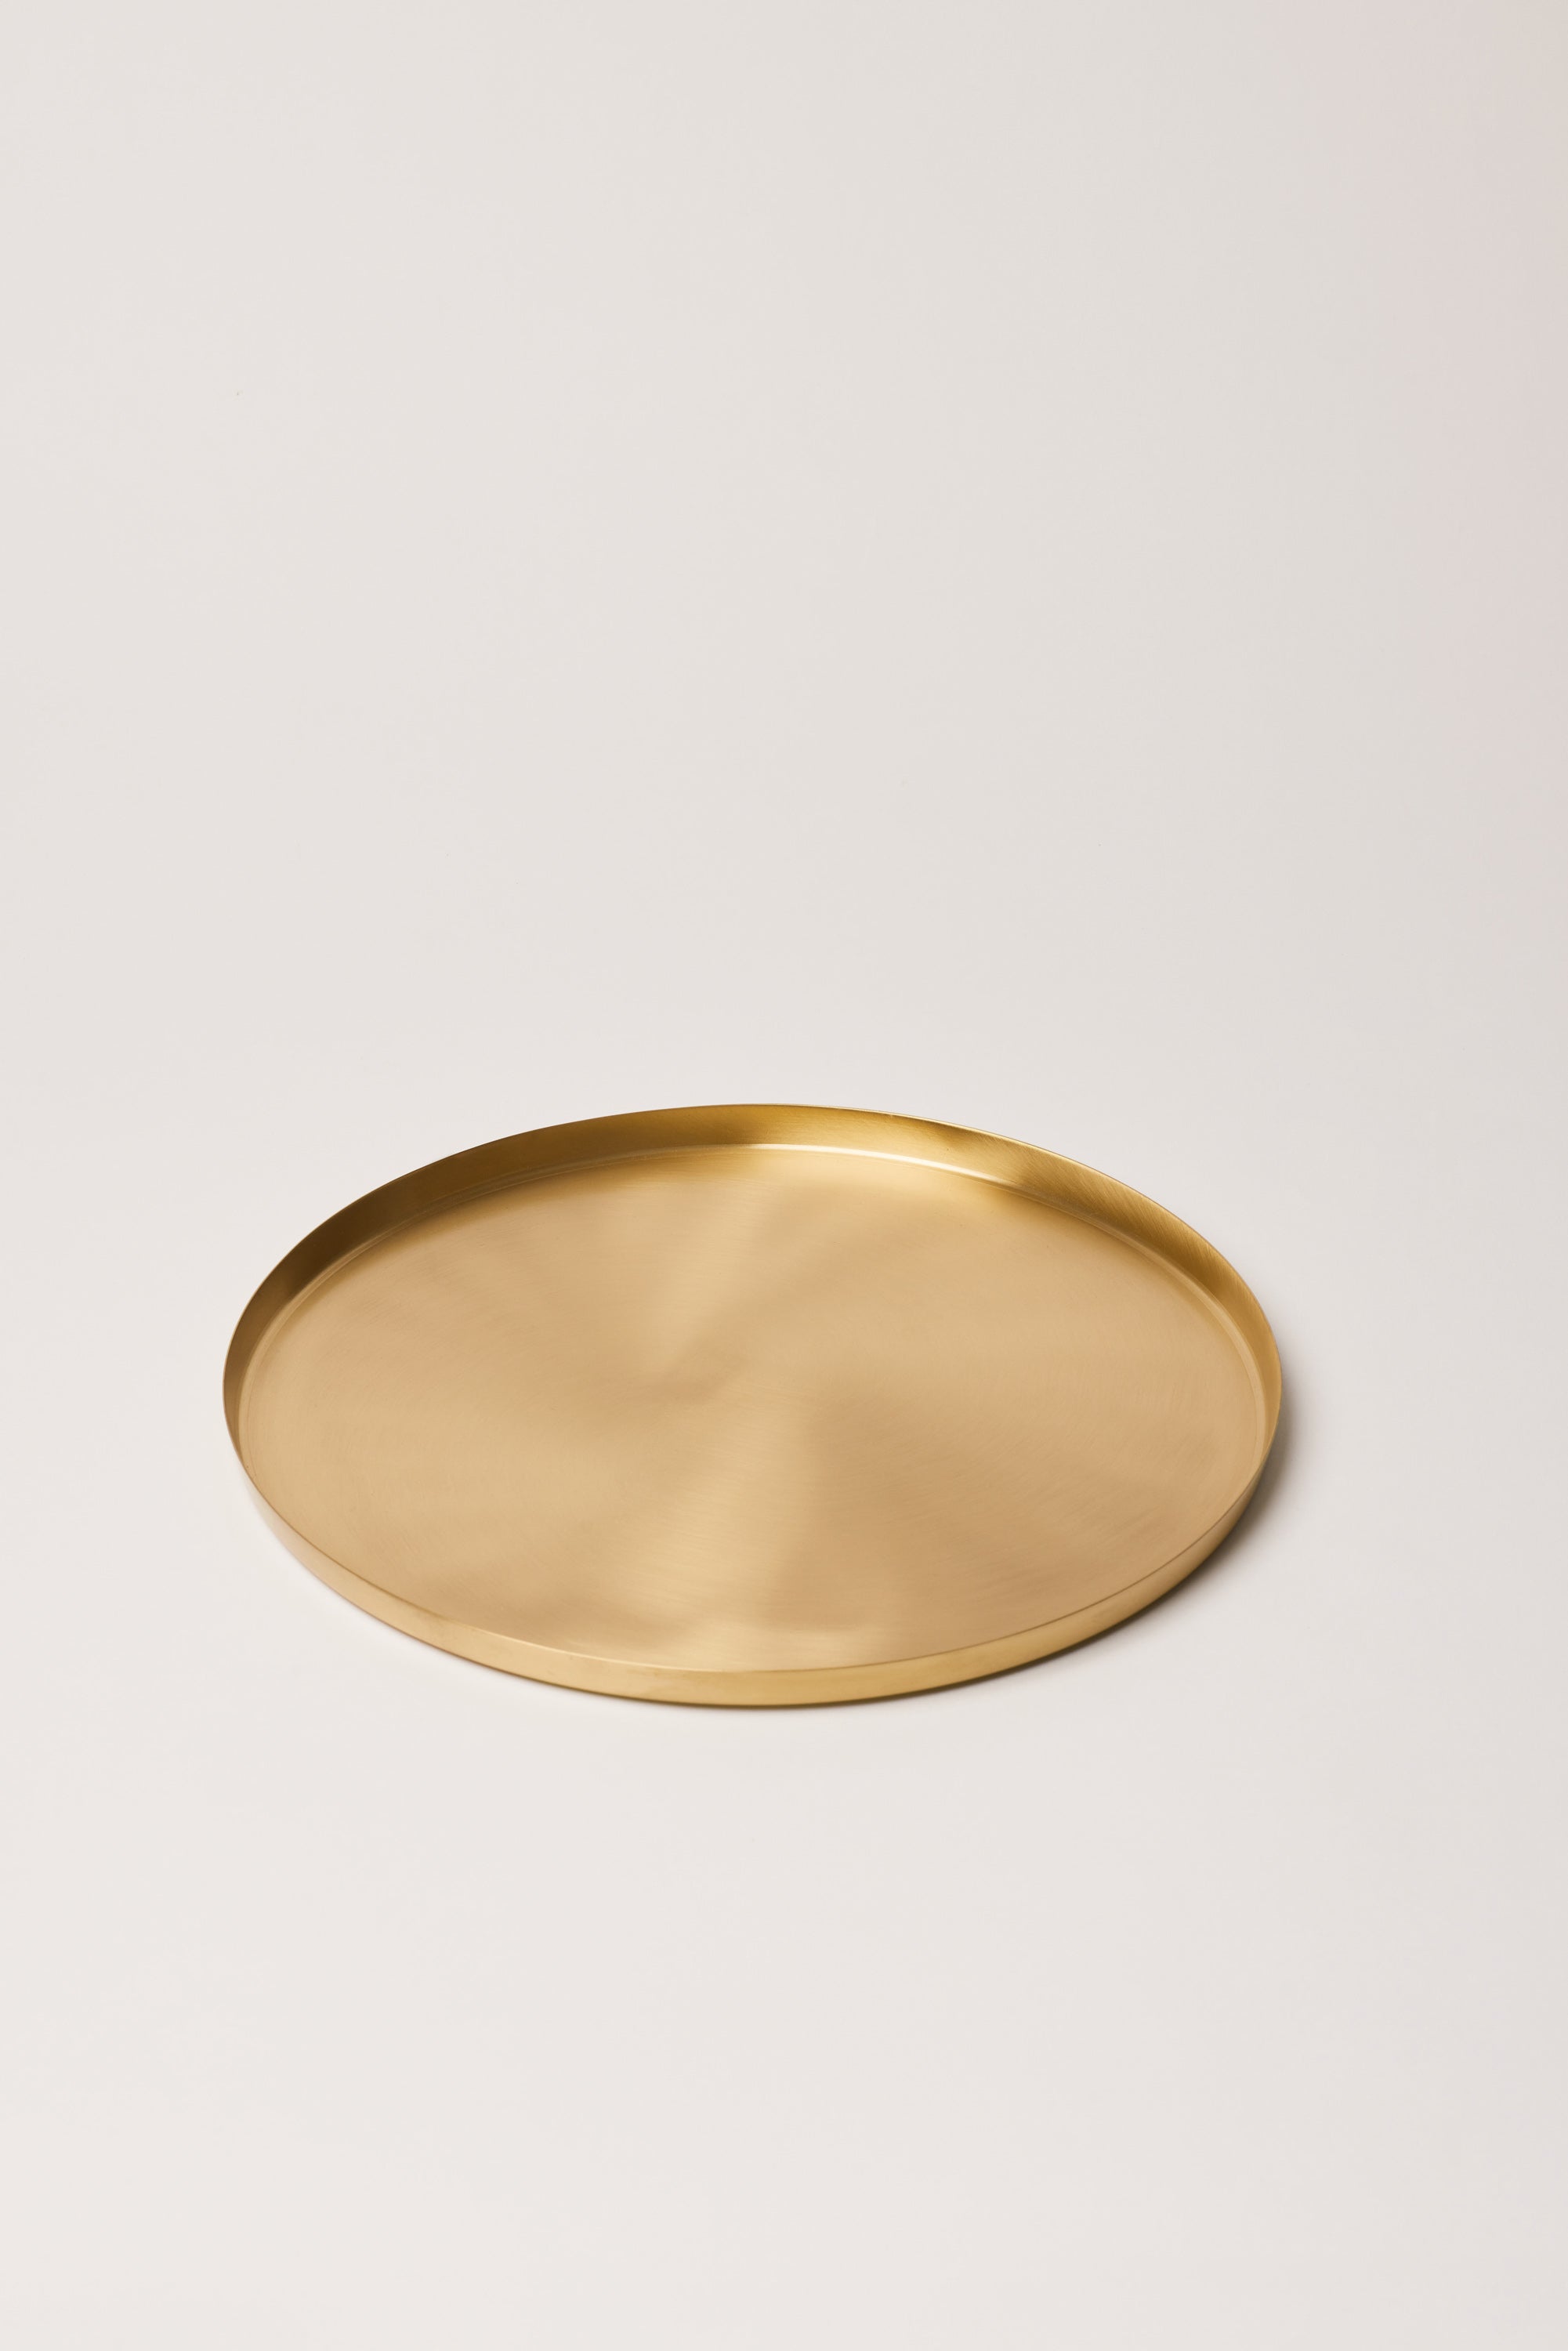 Heirloom Brass Serving Tray / Plate